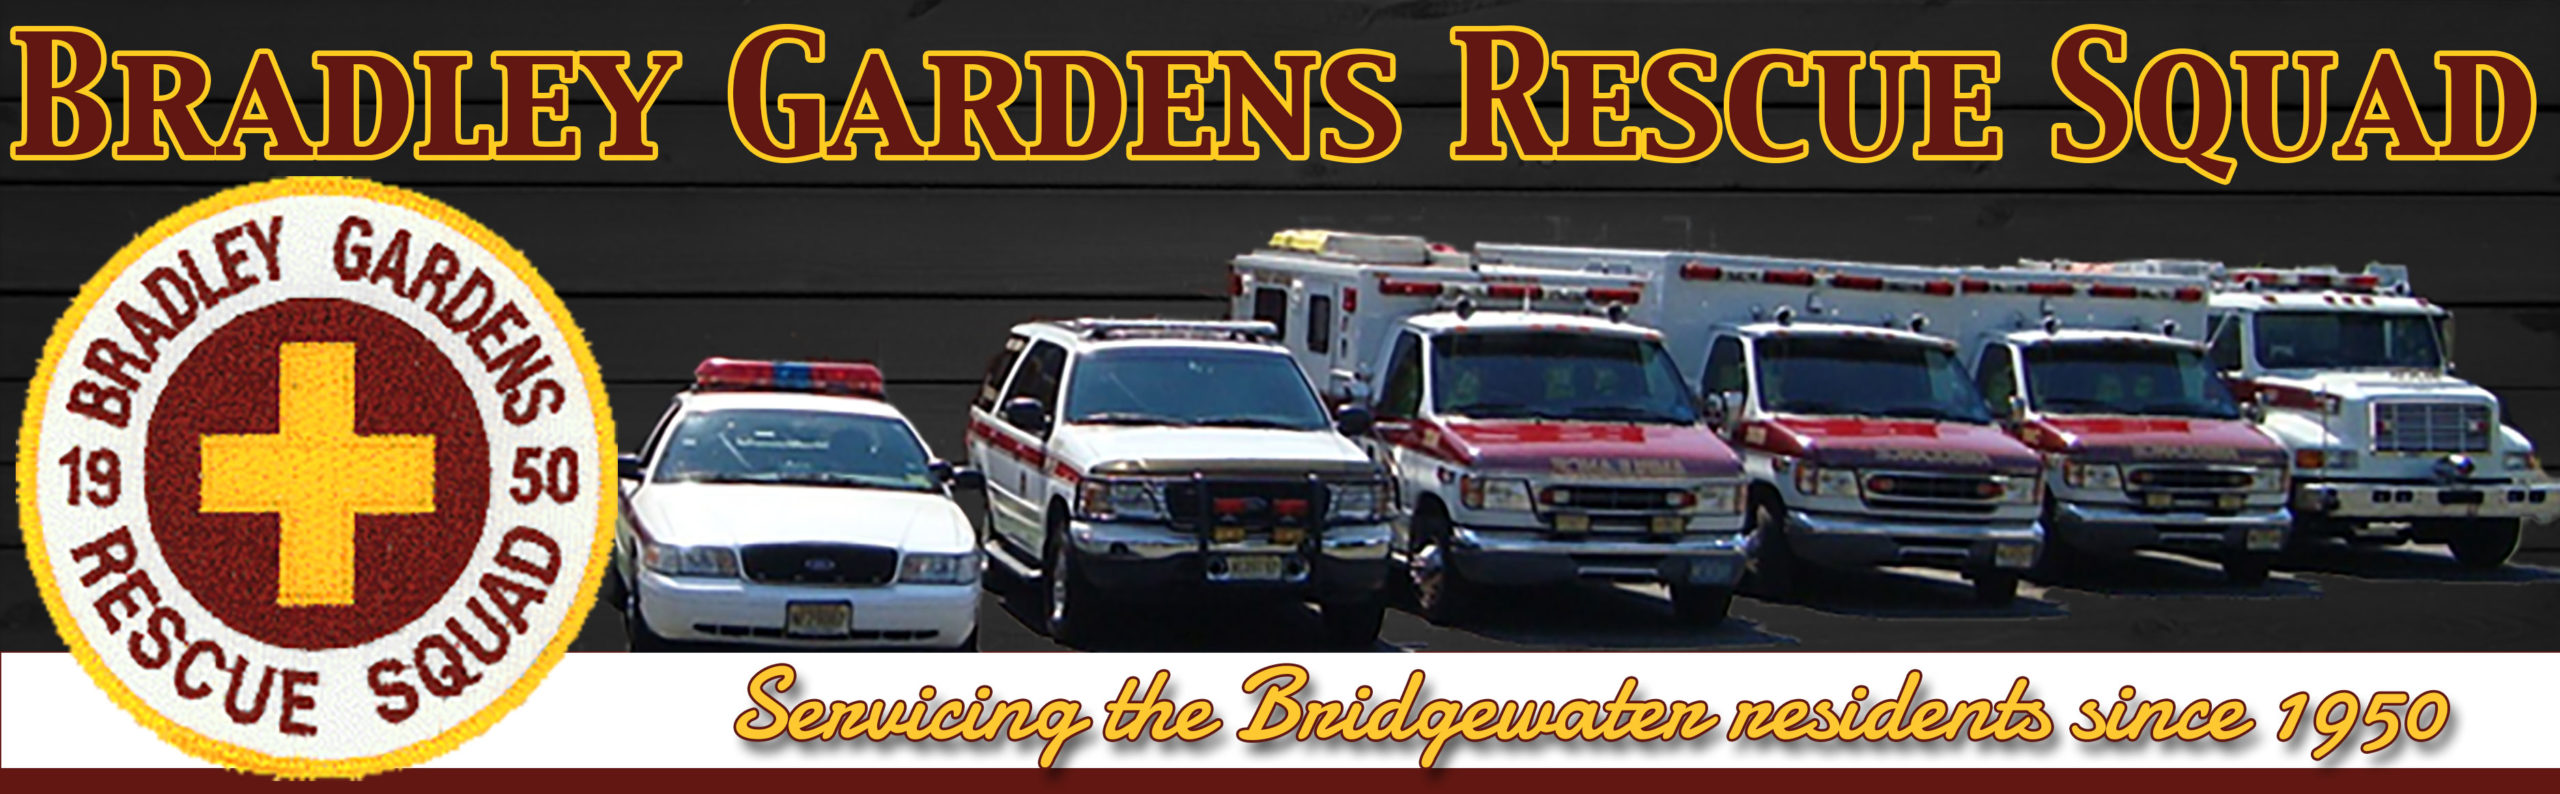 Bradley Gardens Rescue Squad